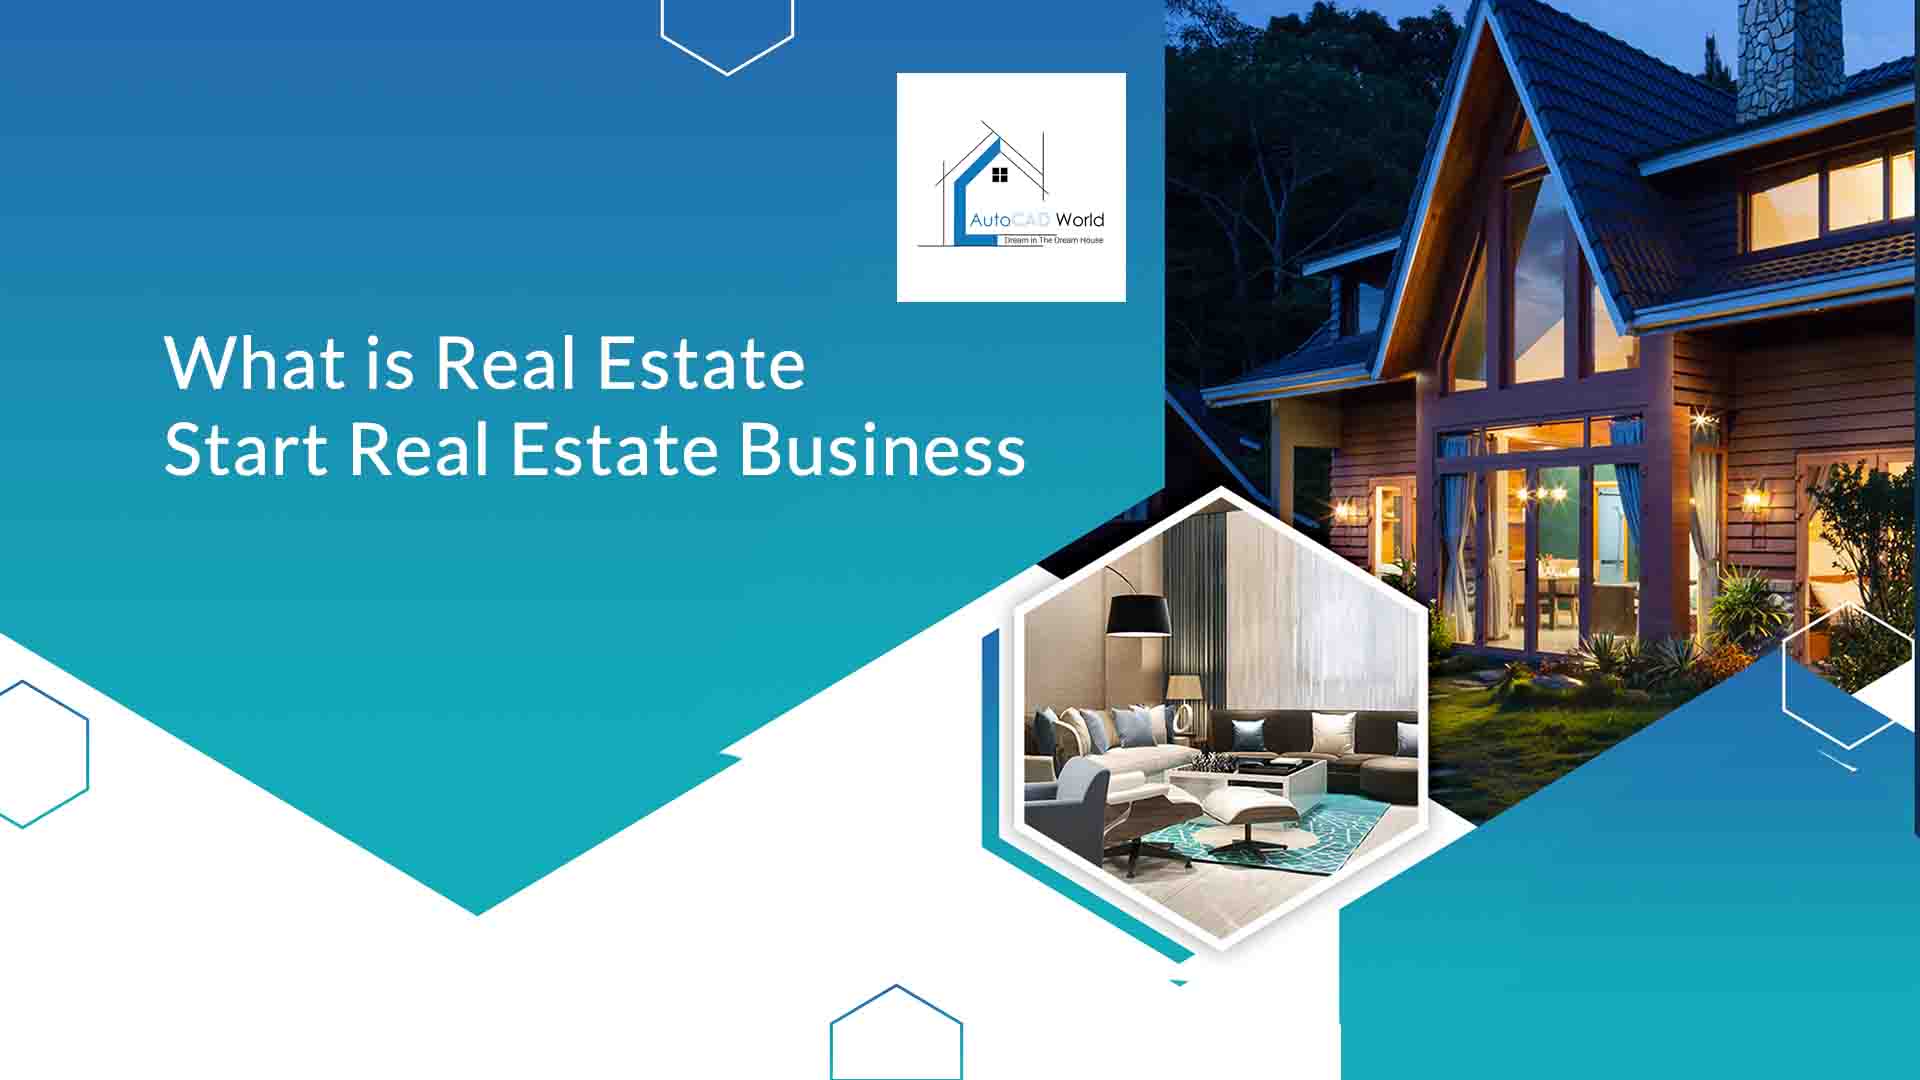 Real Estate Business Start